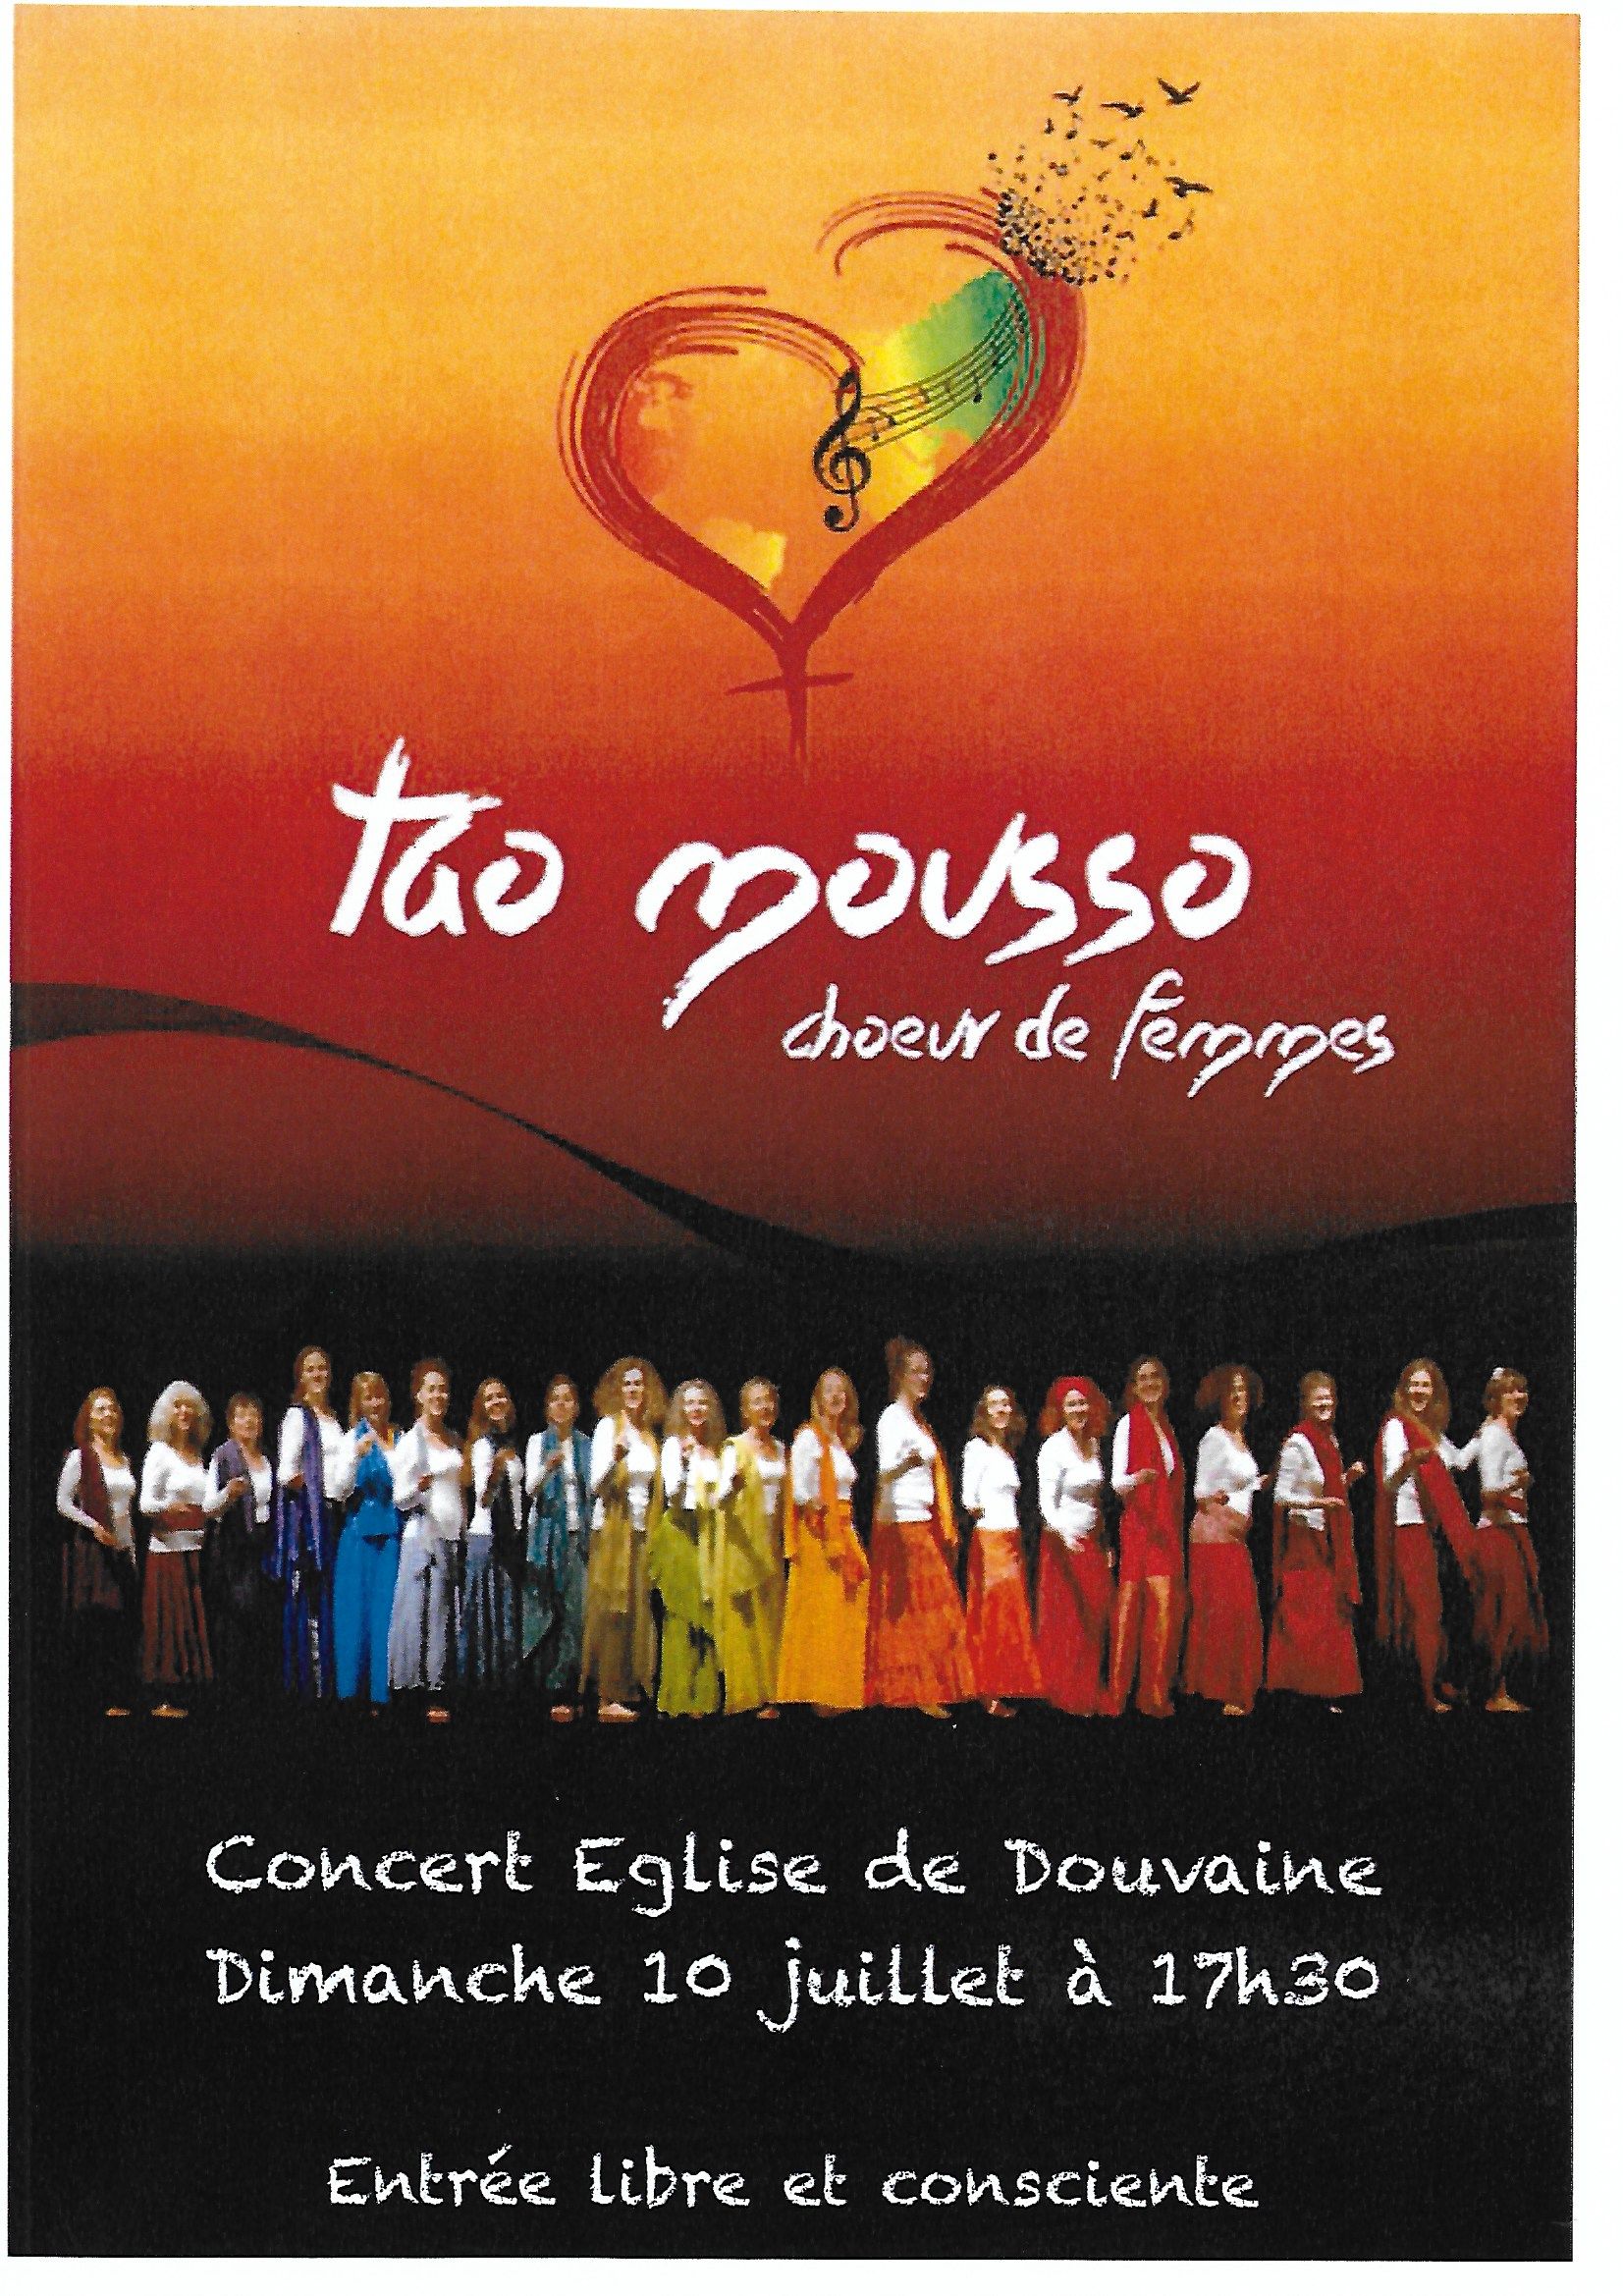 Concert Tao Mousso